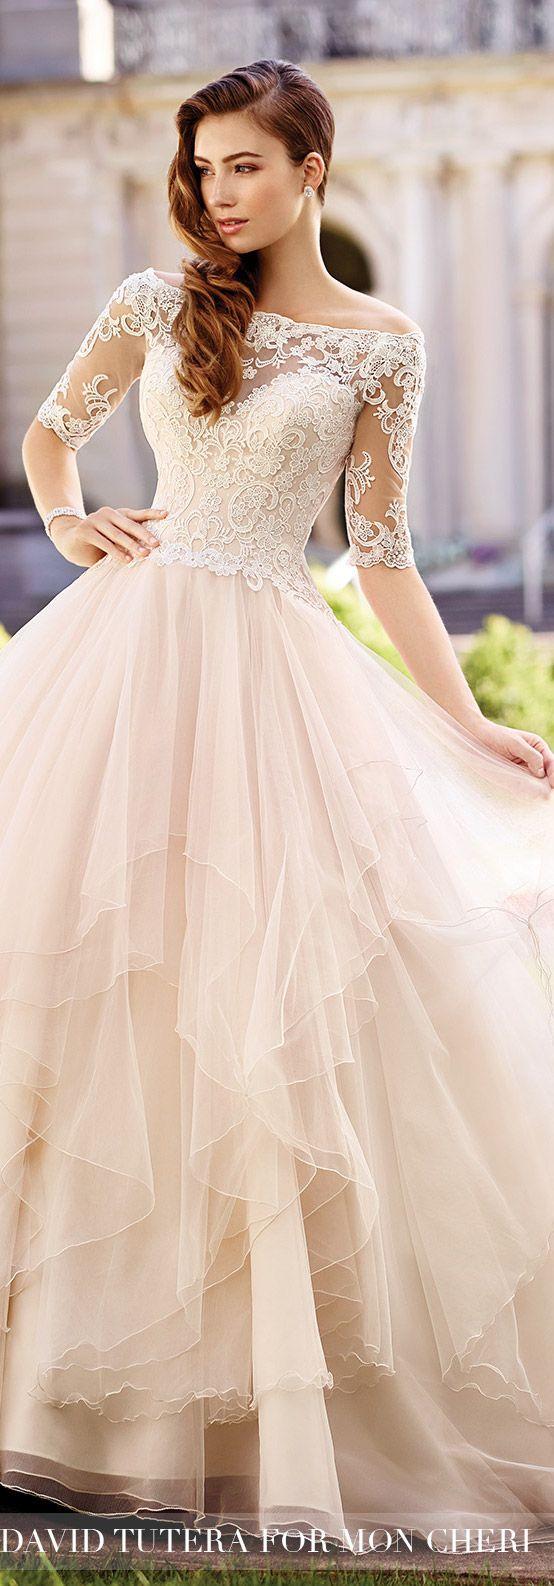 Wedding - Illusion Sleeved Beaded Tulle Ball Gown Wedding Dress - 117292 Aurelia